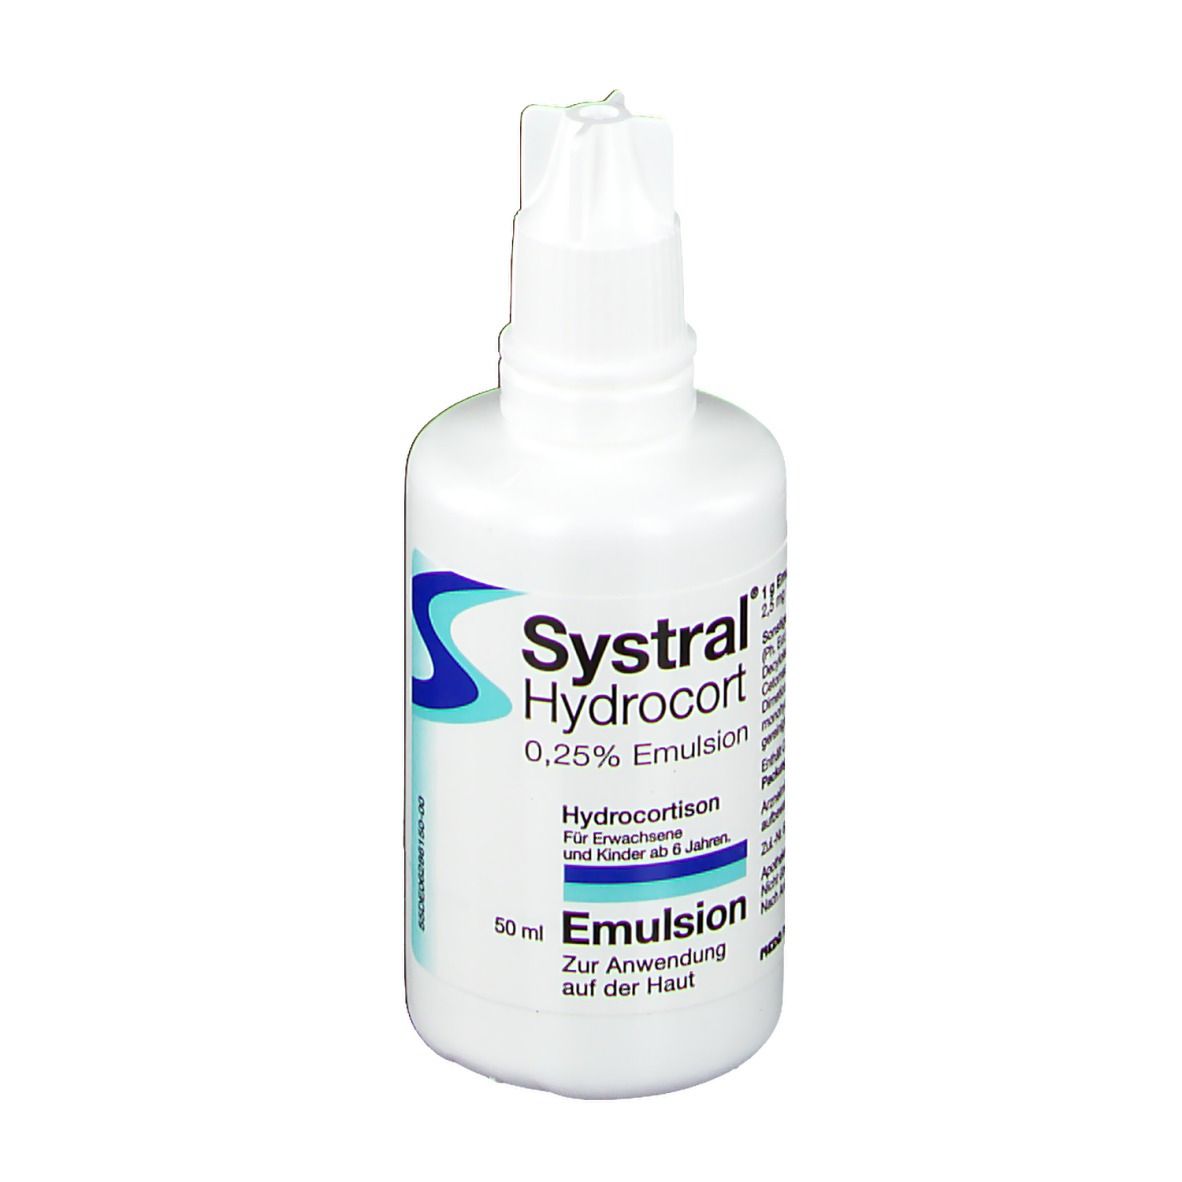 Systral® Hydrocort 0,25% Emulsion